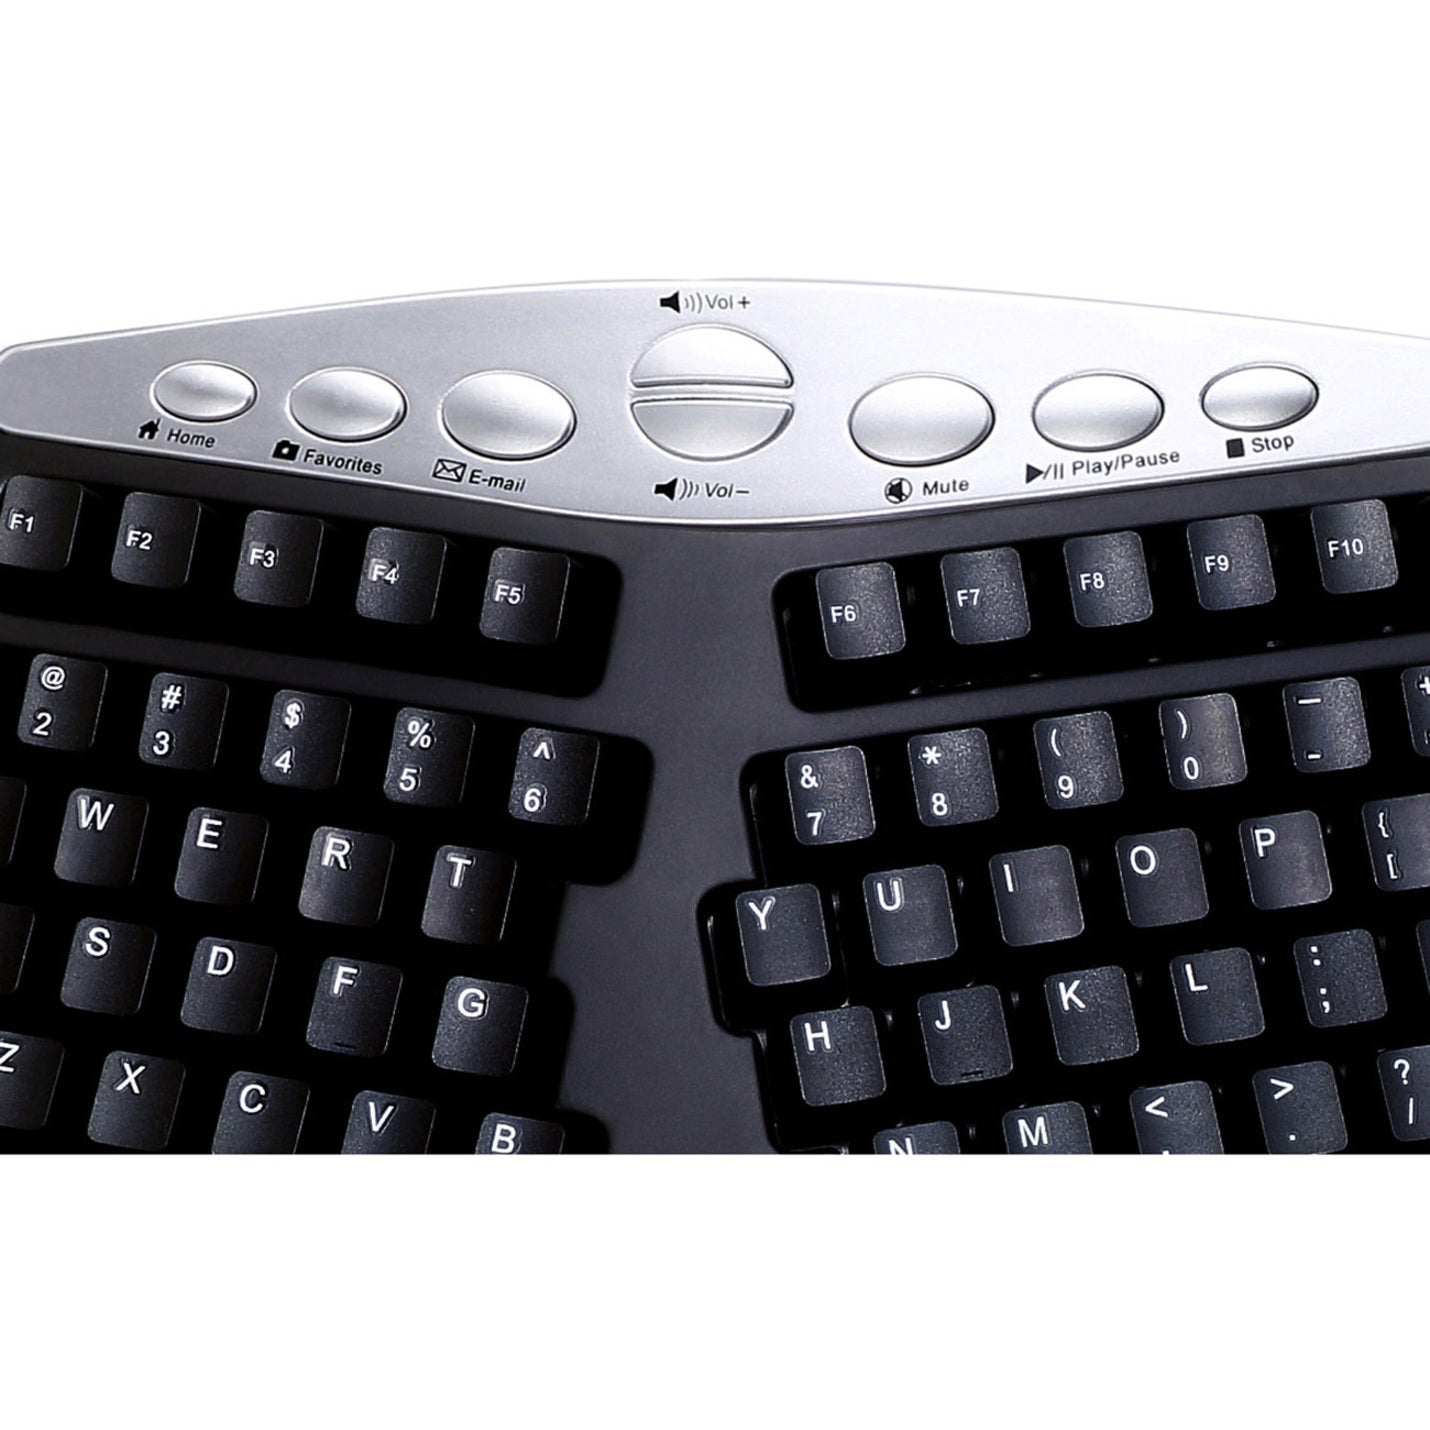 Adesso PCK-208B Tru-Form Media Contoured Ergonomic Keyboard, Multimedia Hot Keys, USB Connectivity